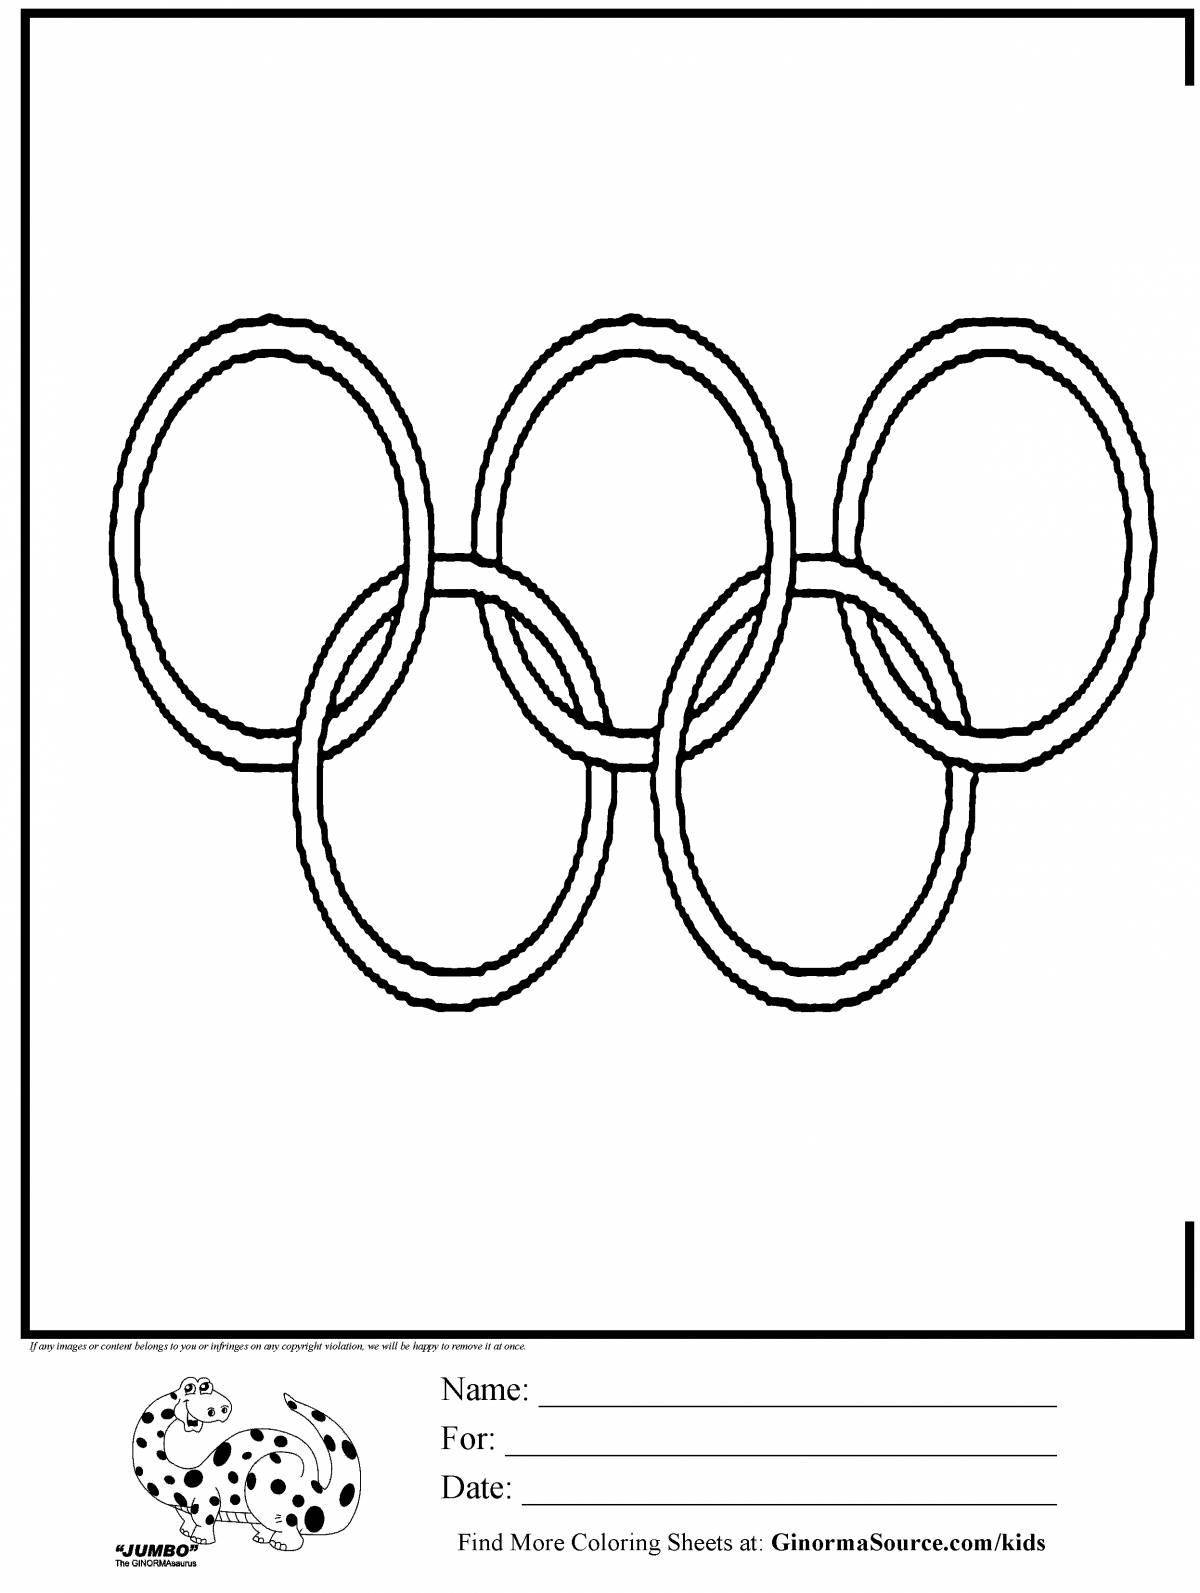 Раскраска буйный олимпийский флаг